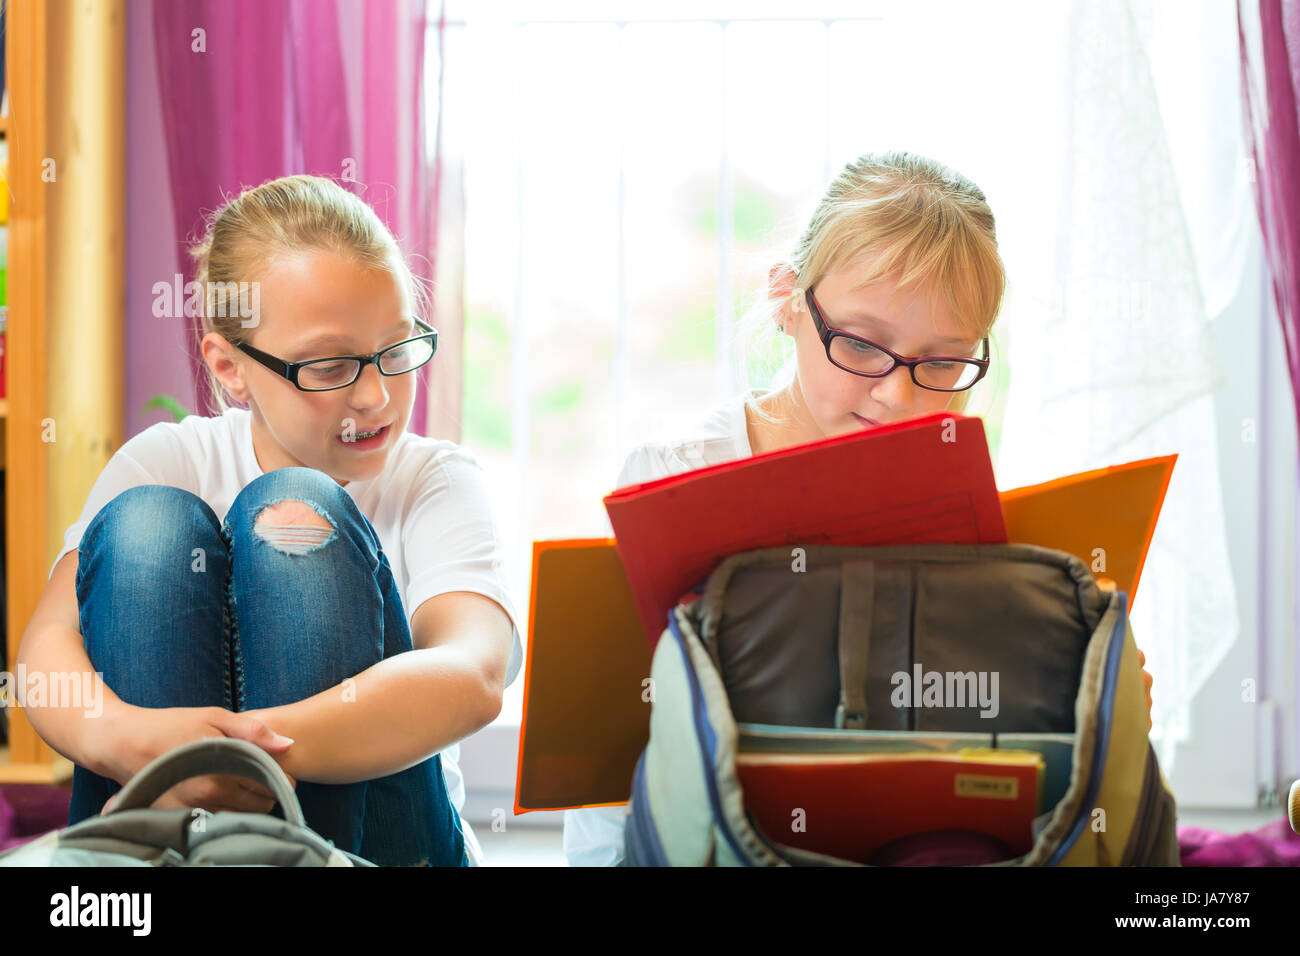 girl with homework Stock Photo